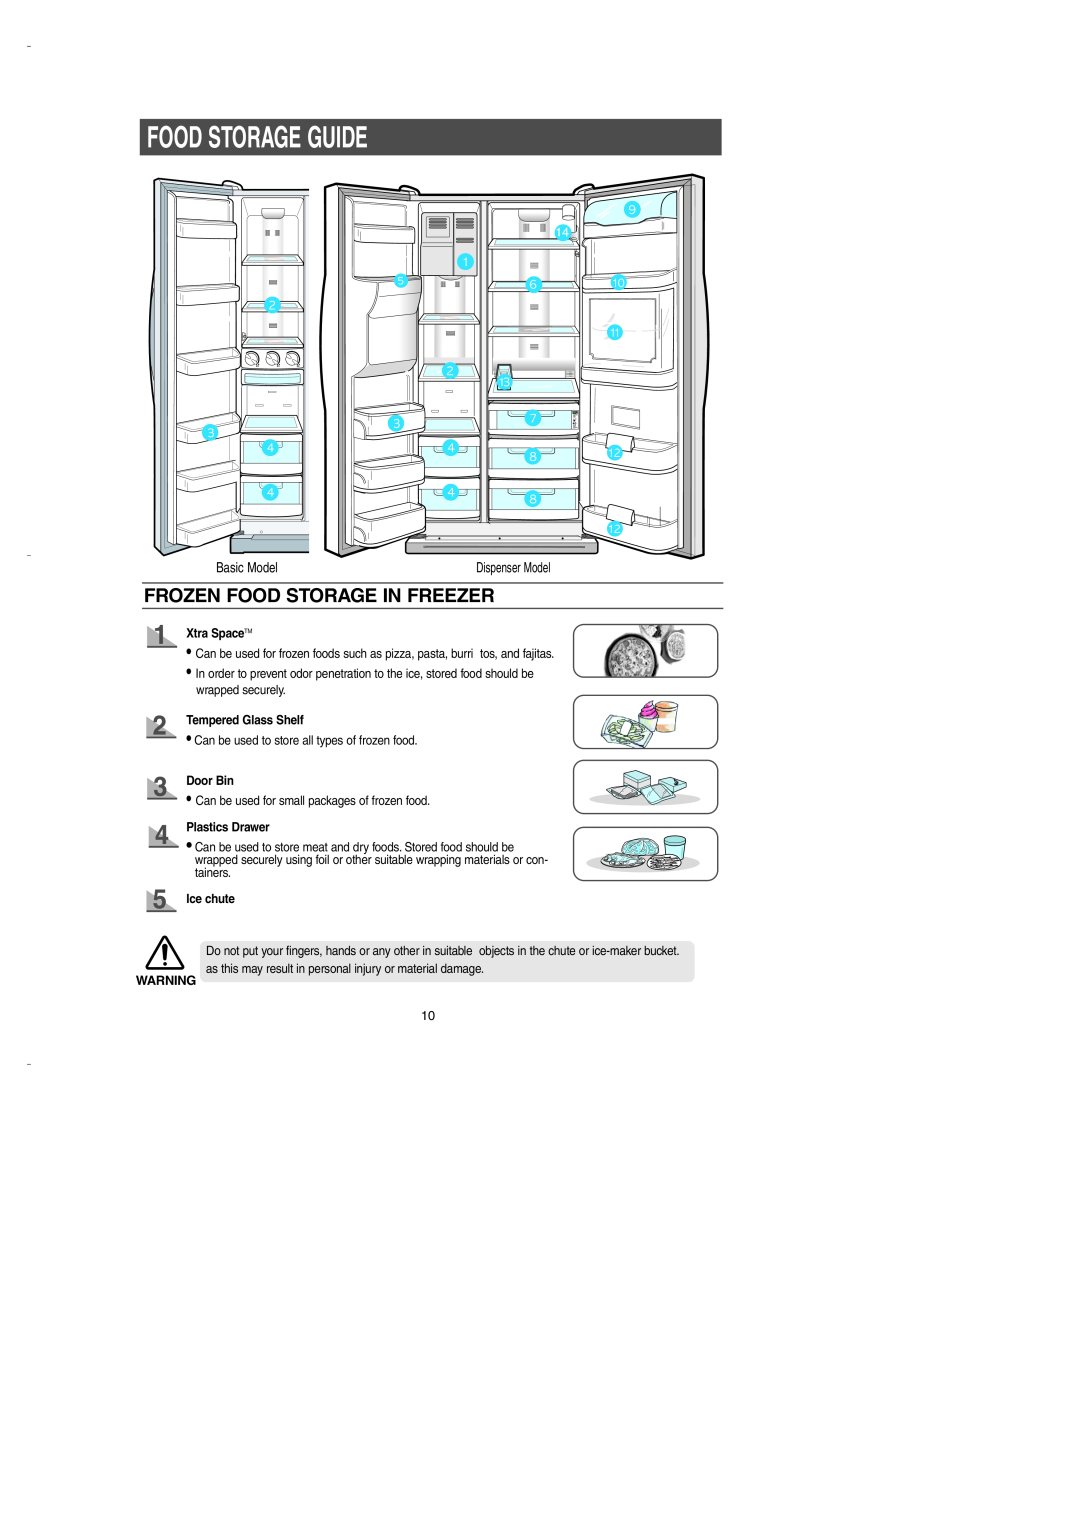 Samsung DA99-00275B Food Storage Guide, Frozen Food Storage In Freezer, Xtra SpaceTM, Tempered Glass Shelf, Door Bin 